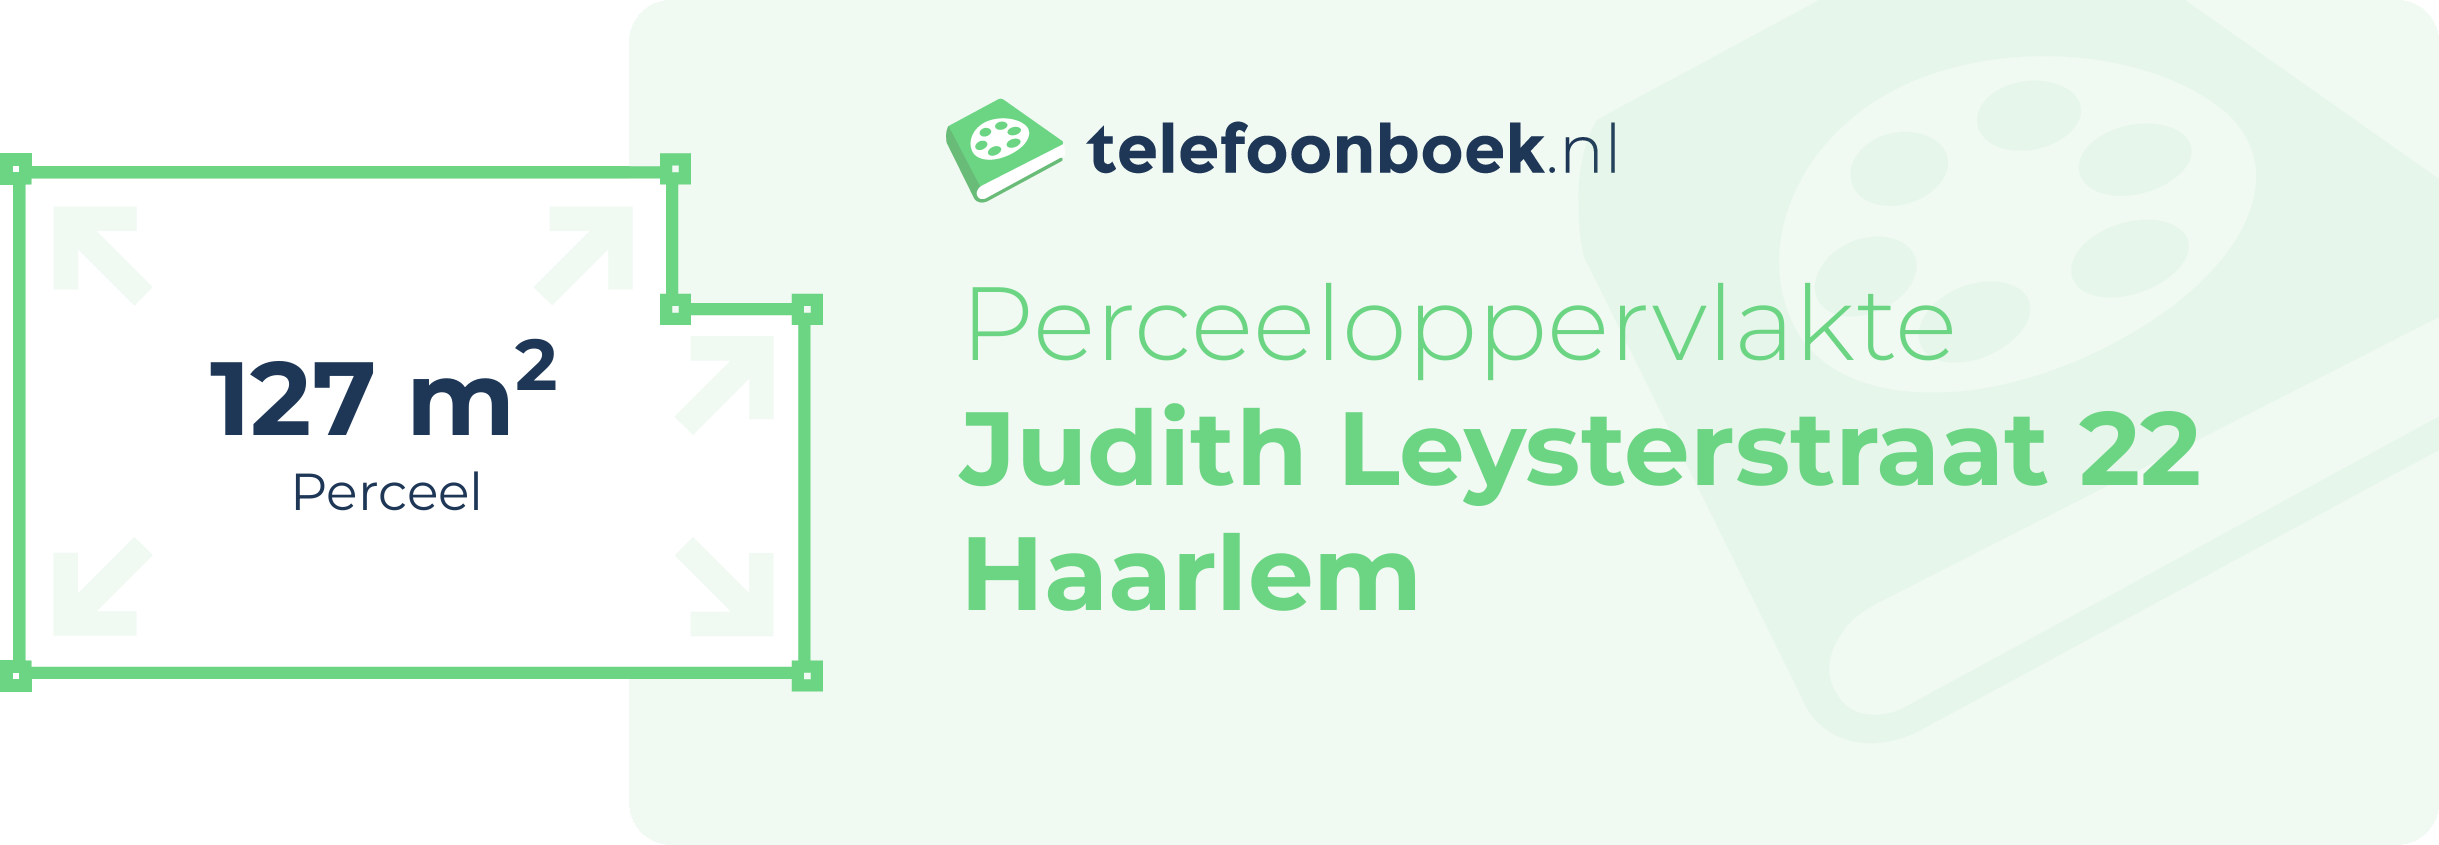 Perceeloppervlakte Judith Leysterstraat 22 Haarlem